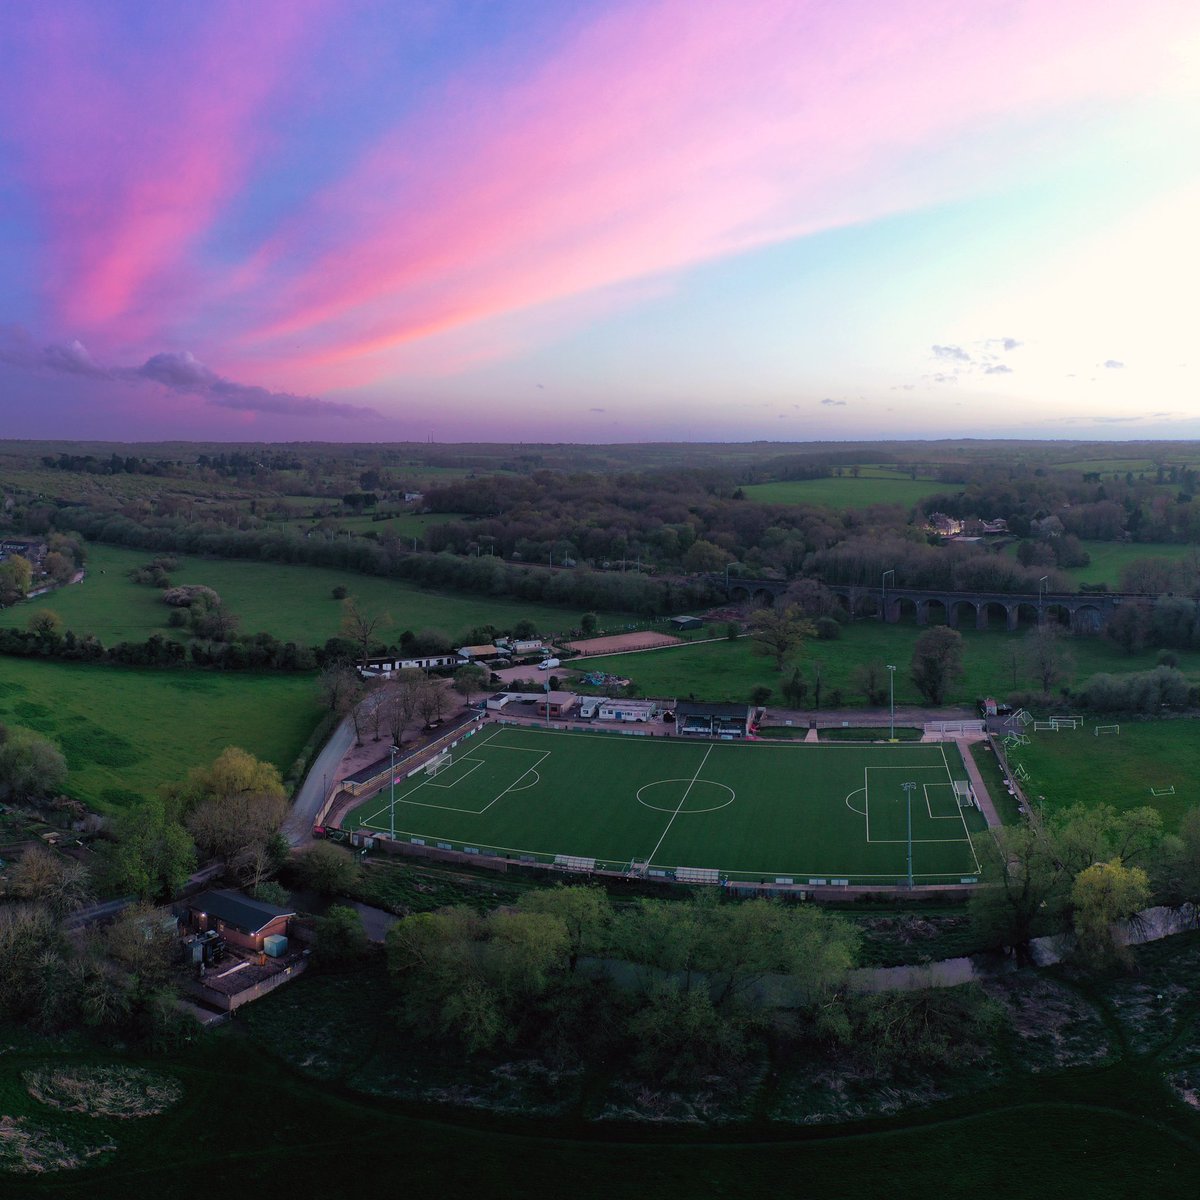 Hertingfordbury Park this very eve. Wind died down and pink sky arrived. #hertford #hertingfordburypark #aerial #dronephoto #aerialphotography #herts #sky #sunset @HertfordshireFA @HertfordTownFC